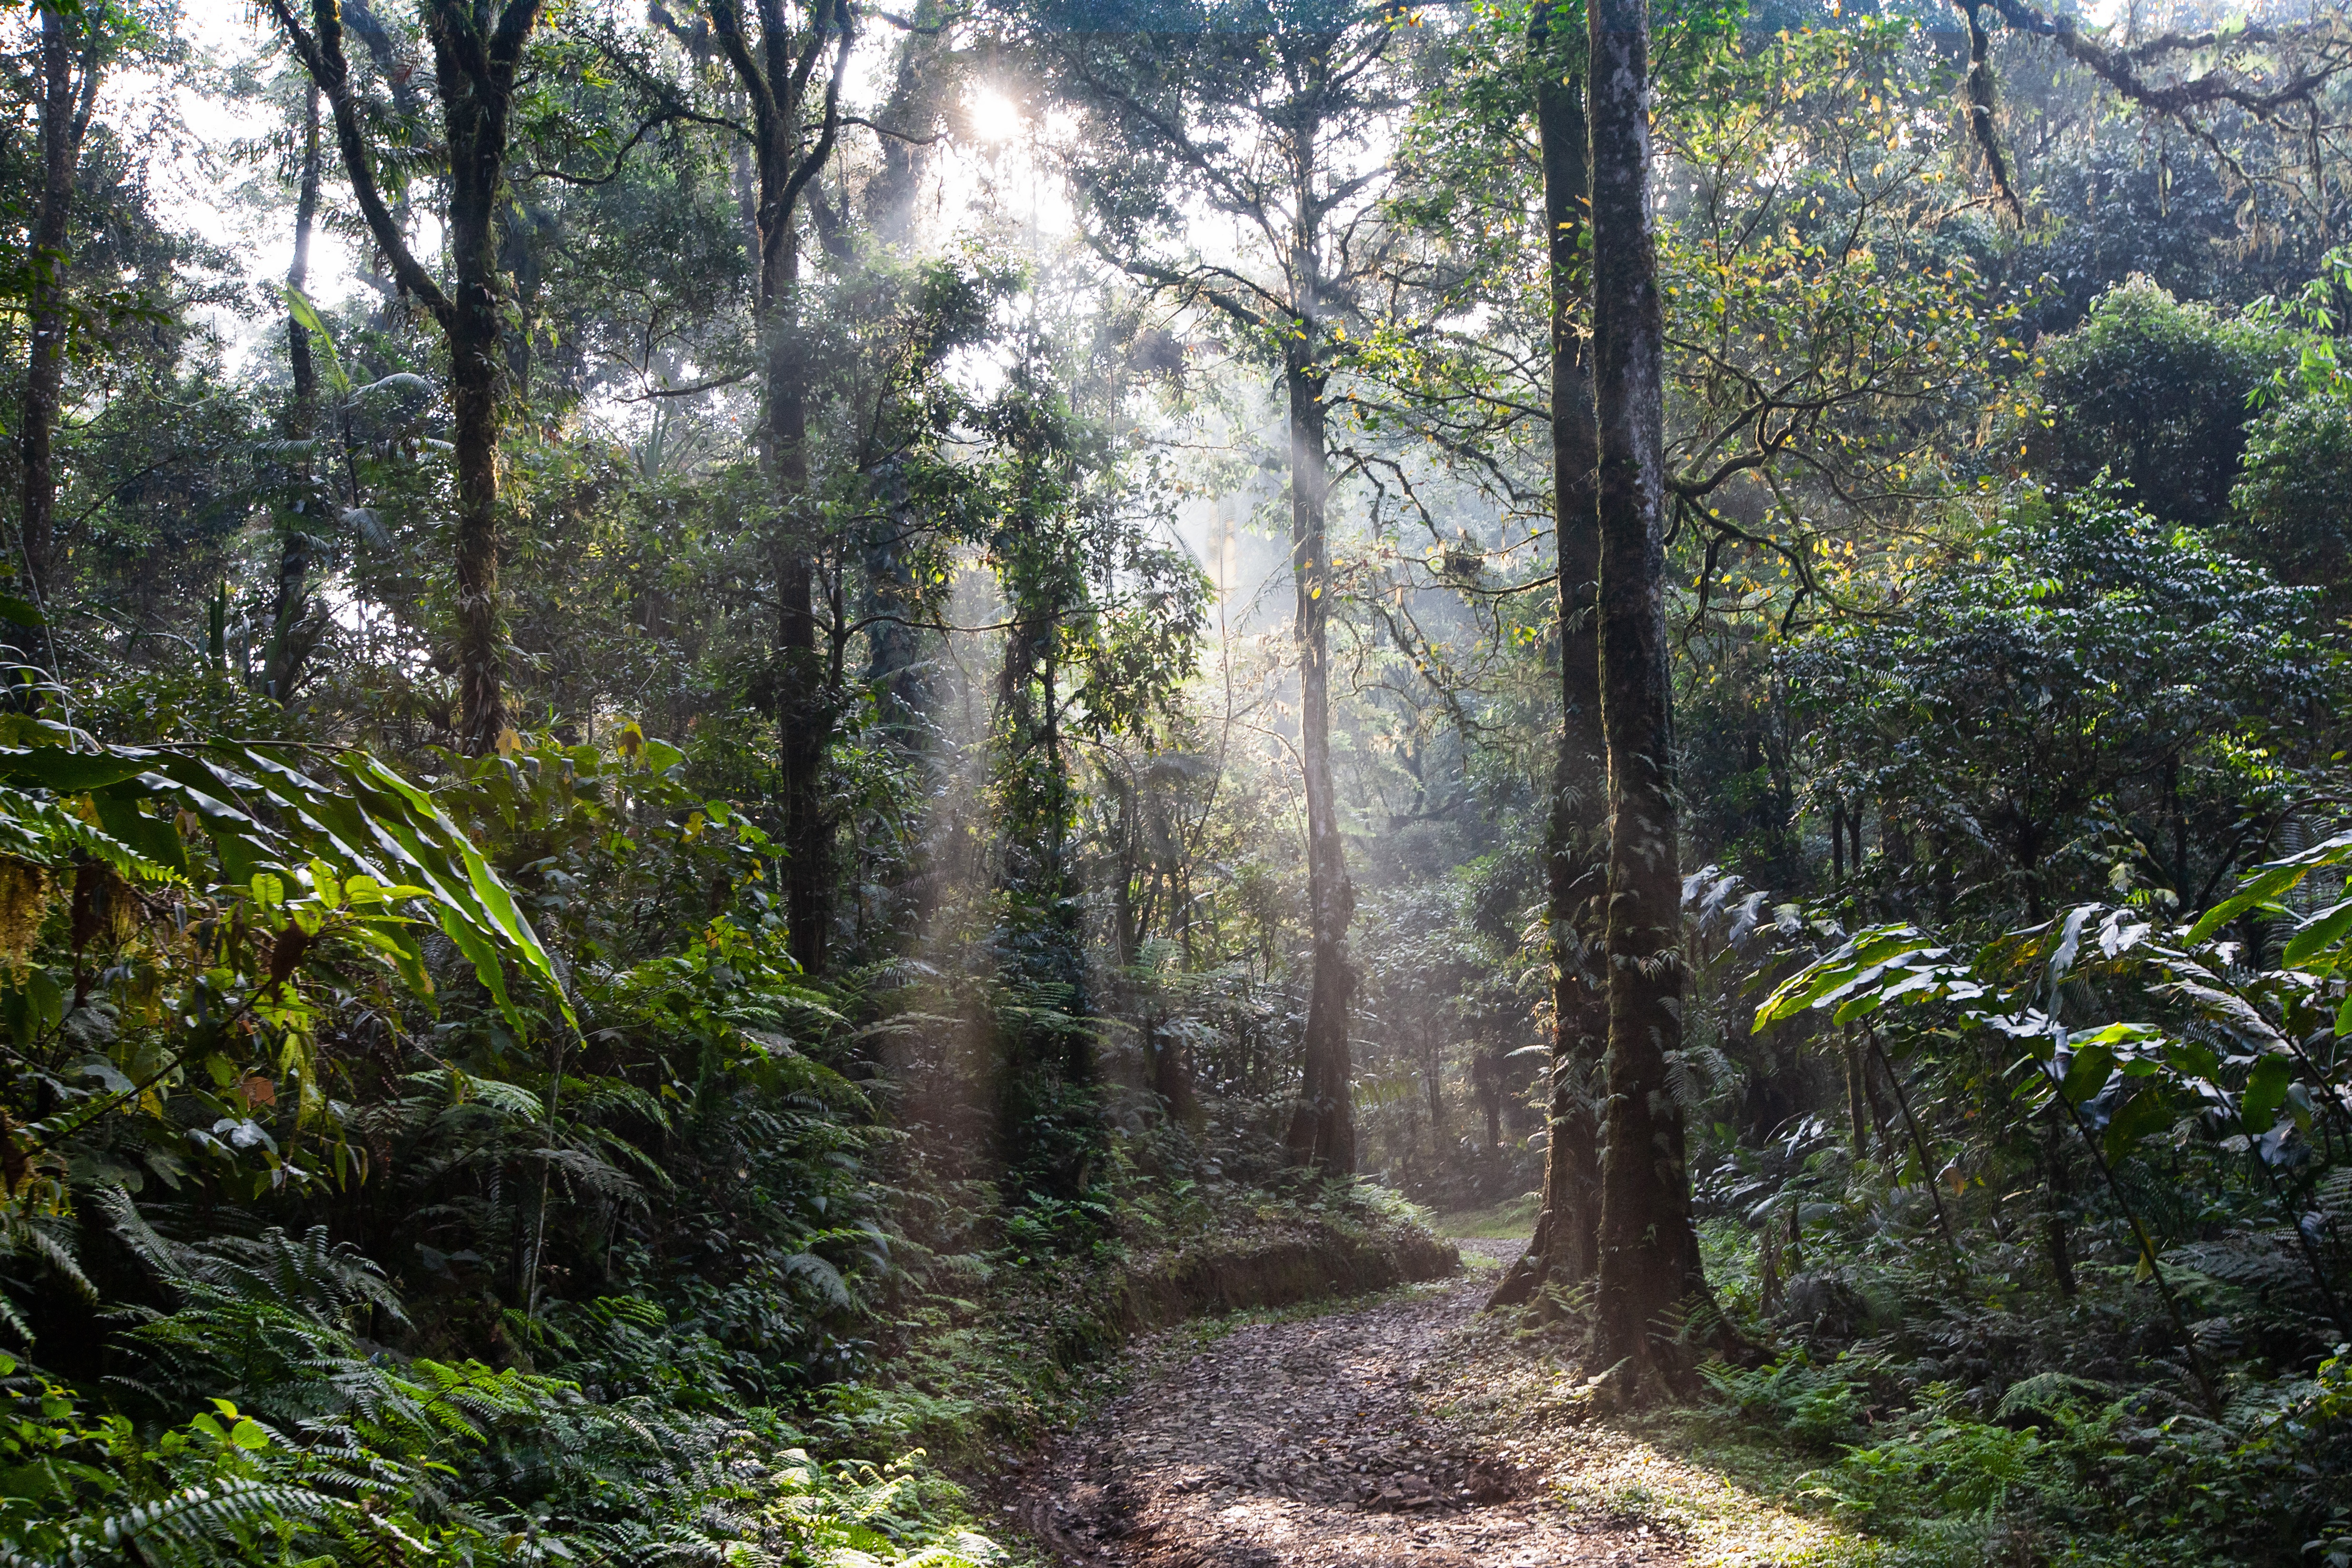 8 Amazon Rainforest Deforestation Facts That Will Shock You - BlogsSoft